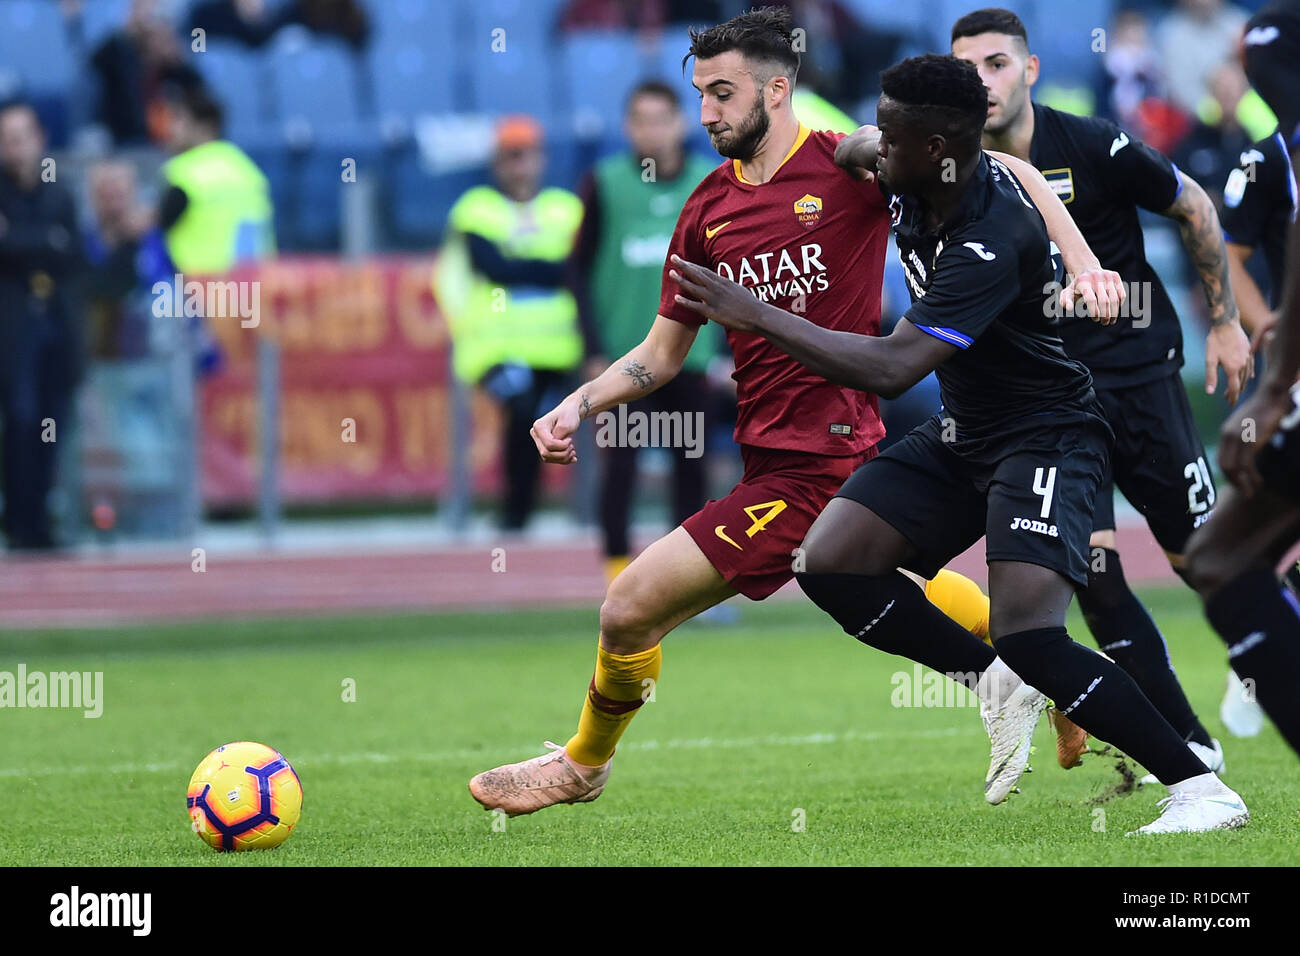 Roma vs sampdoria hi-res stock photography and images - Alamy